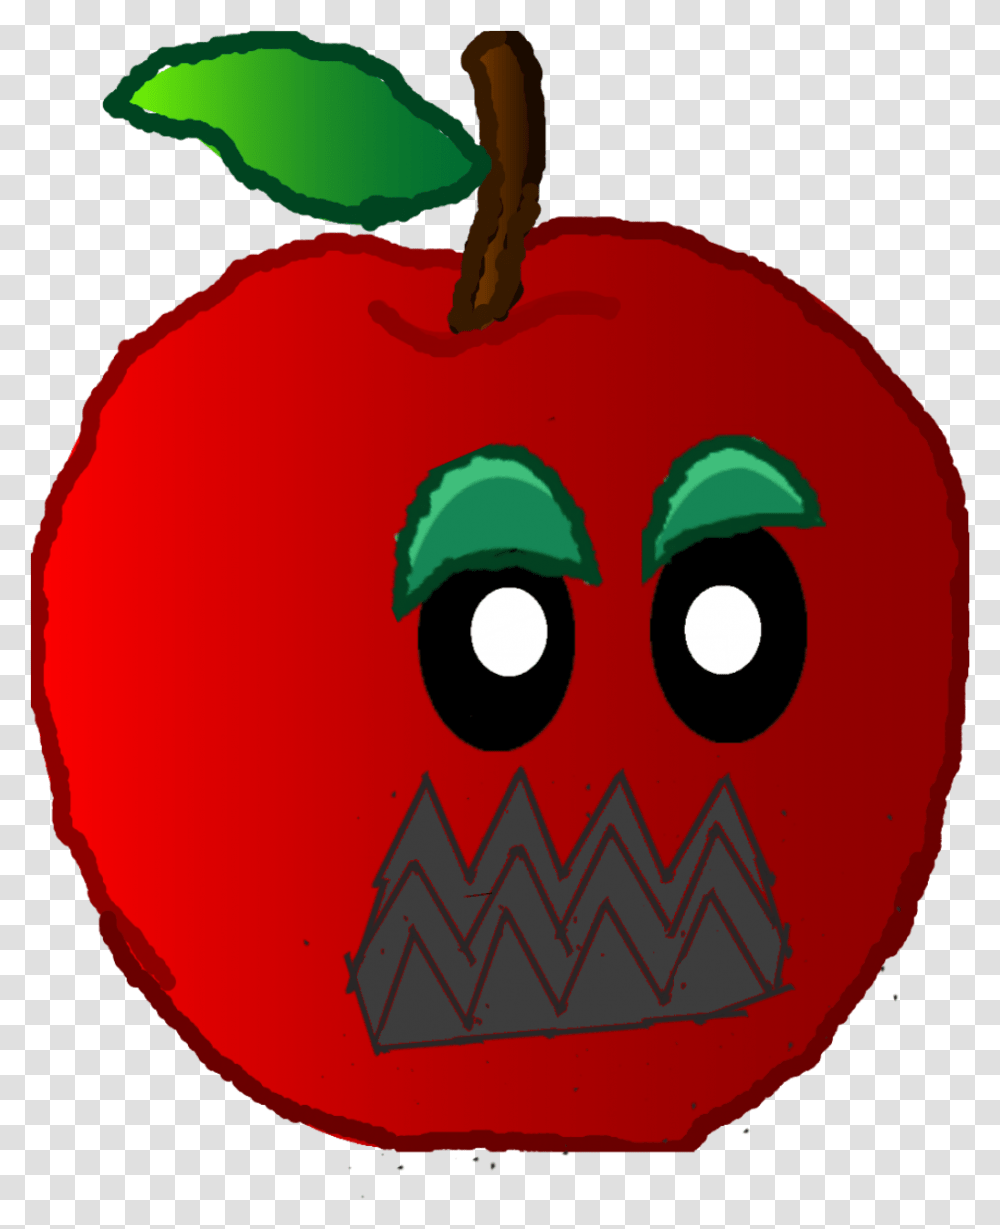 Download Snapple Image Apple Full Size Image Pngkit Pumpkin, Plant, Fruit, Food, Cherry Transparent Png